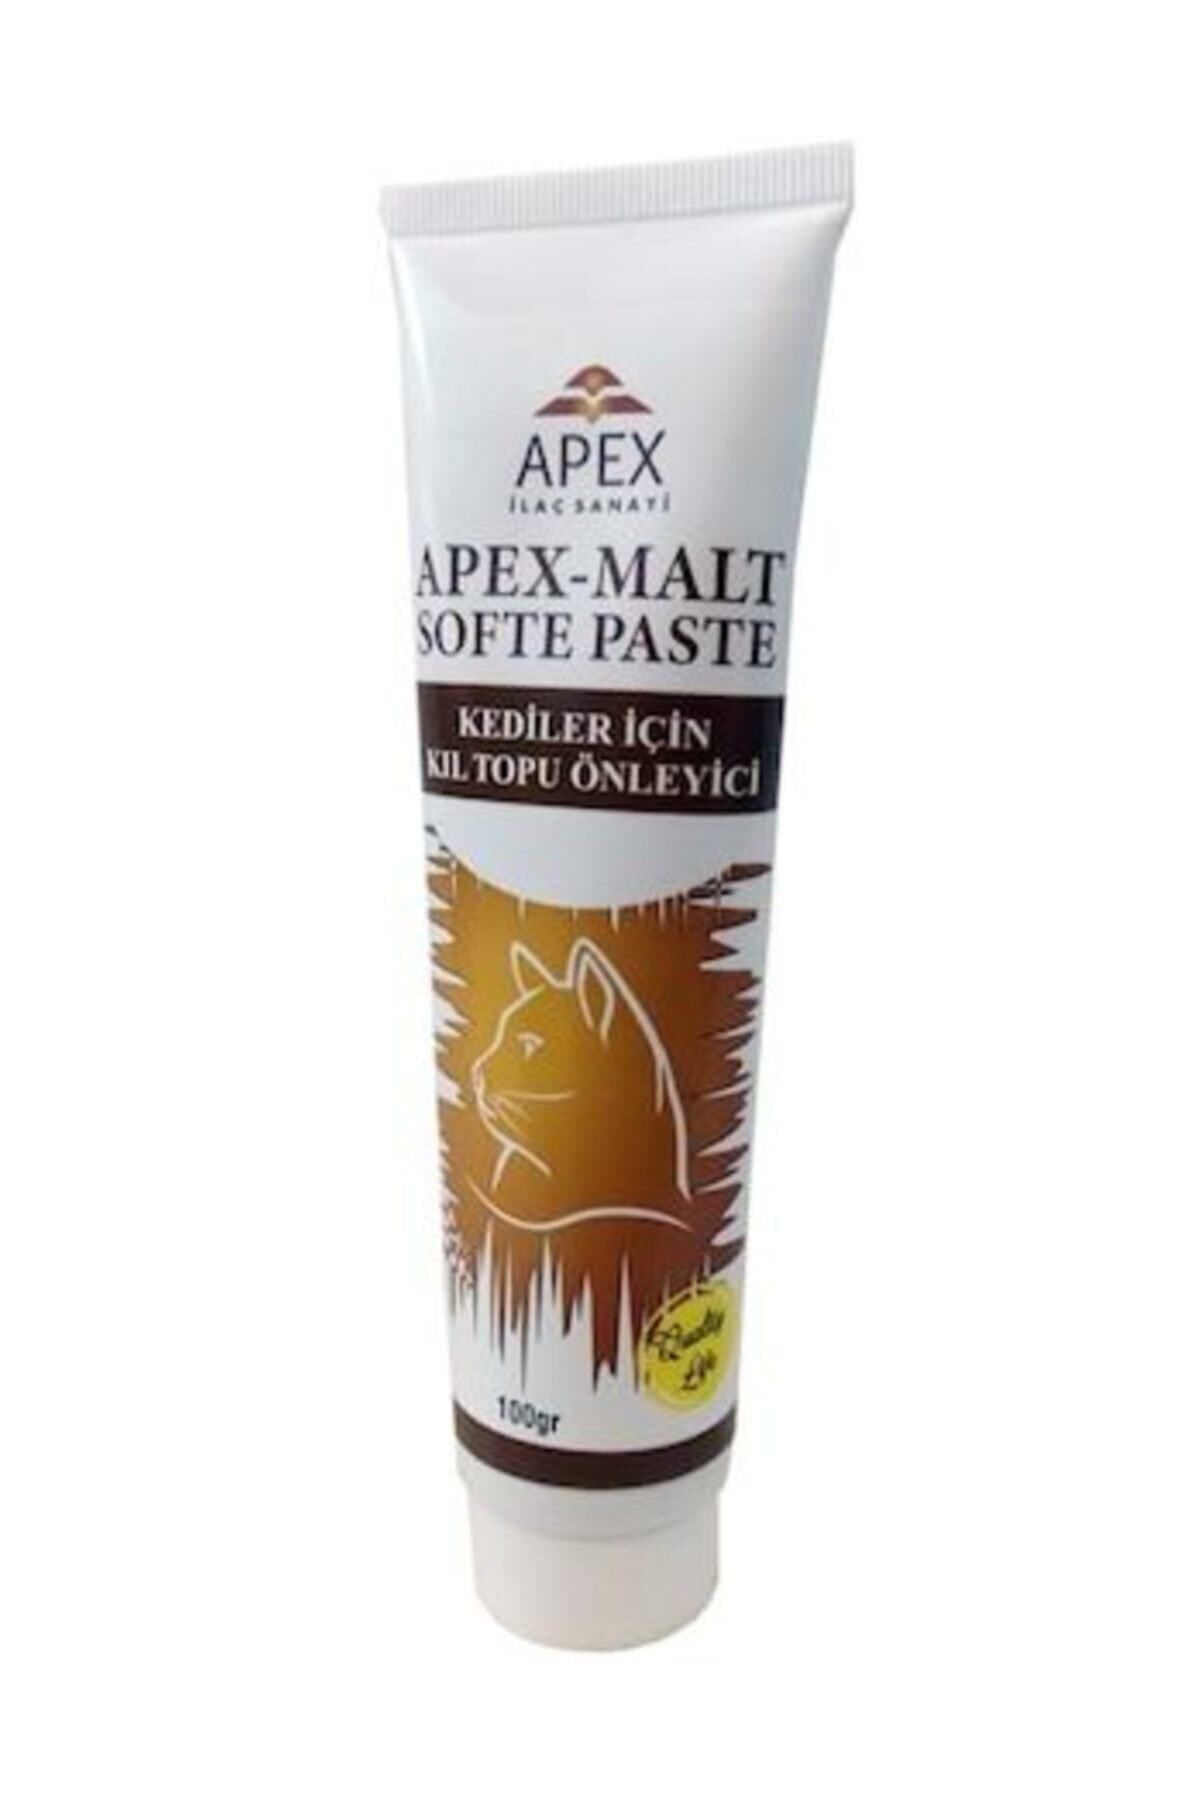 Apex Anti Hairball Kıl Topu Önleyici Kedi Malt Softe Paste 100 gr